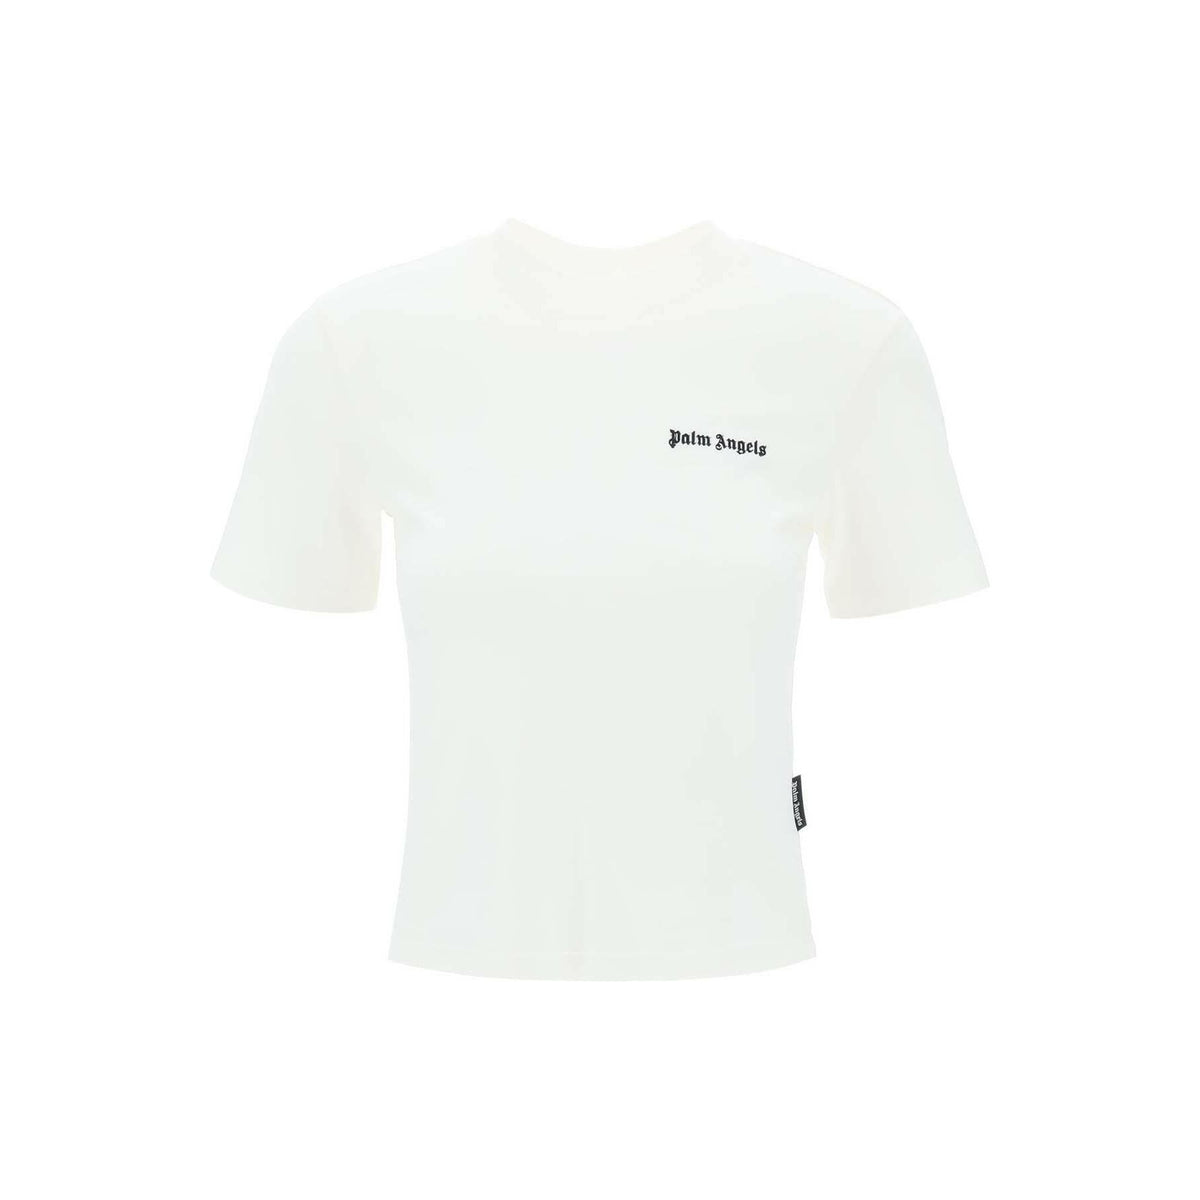 PALM ANGELS - White Cotton T-Shirt - JOHN JULIA